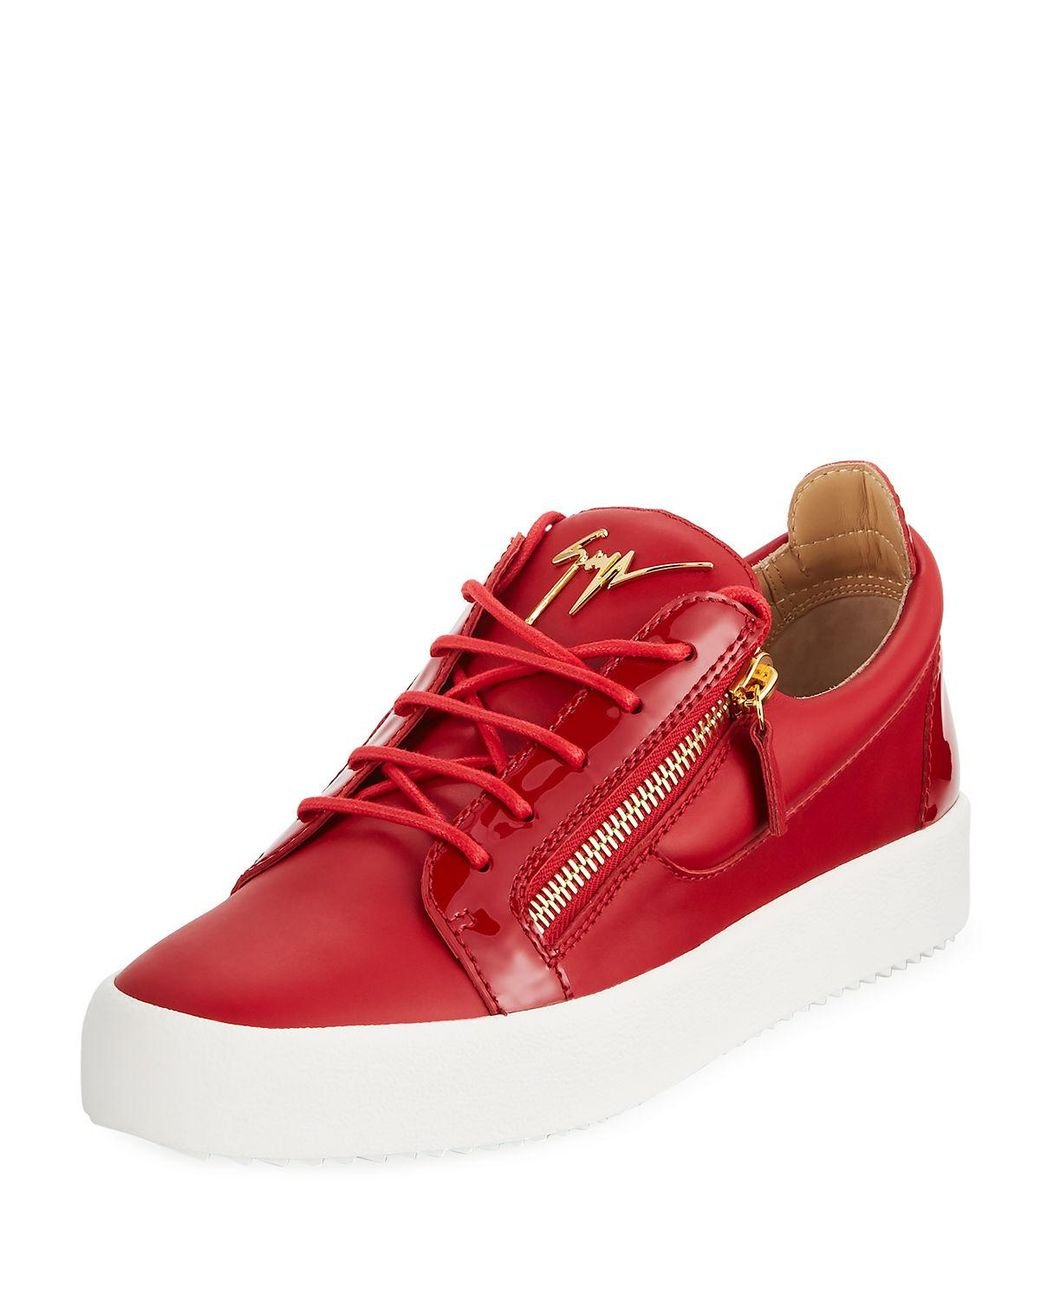 men's red giuseppe zanotti sneakers